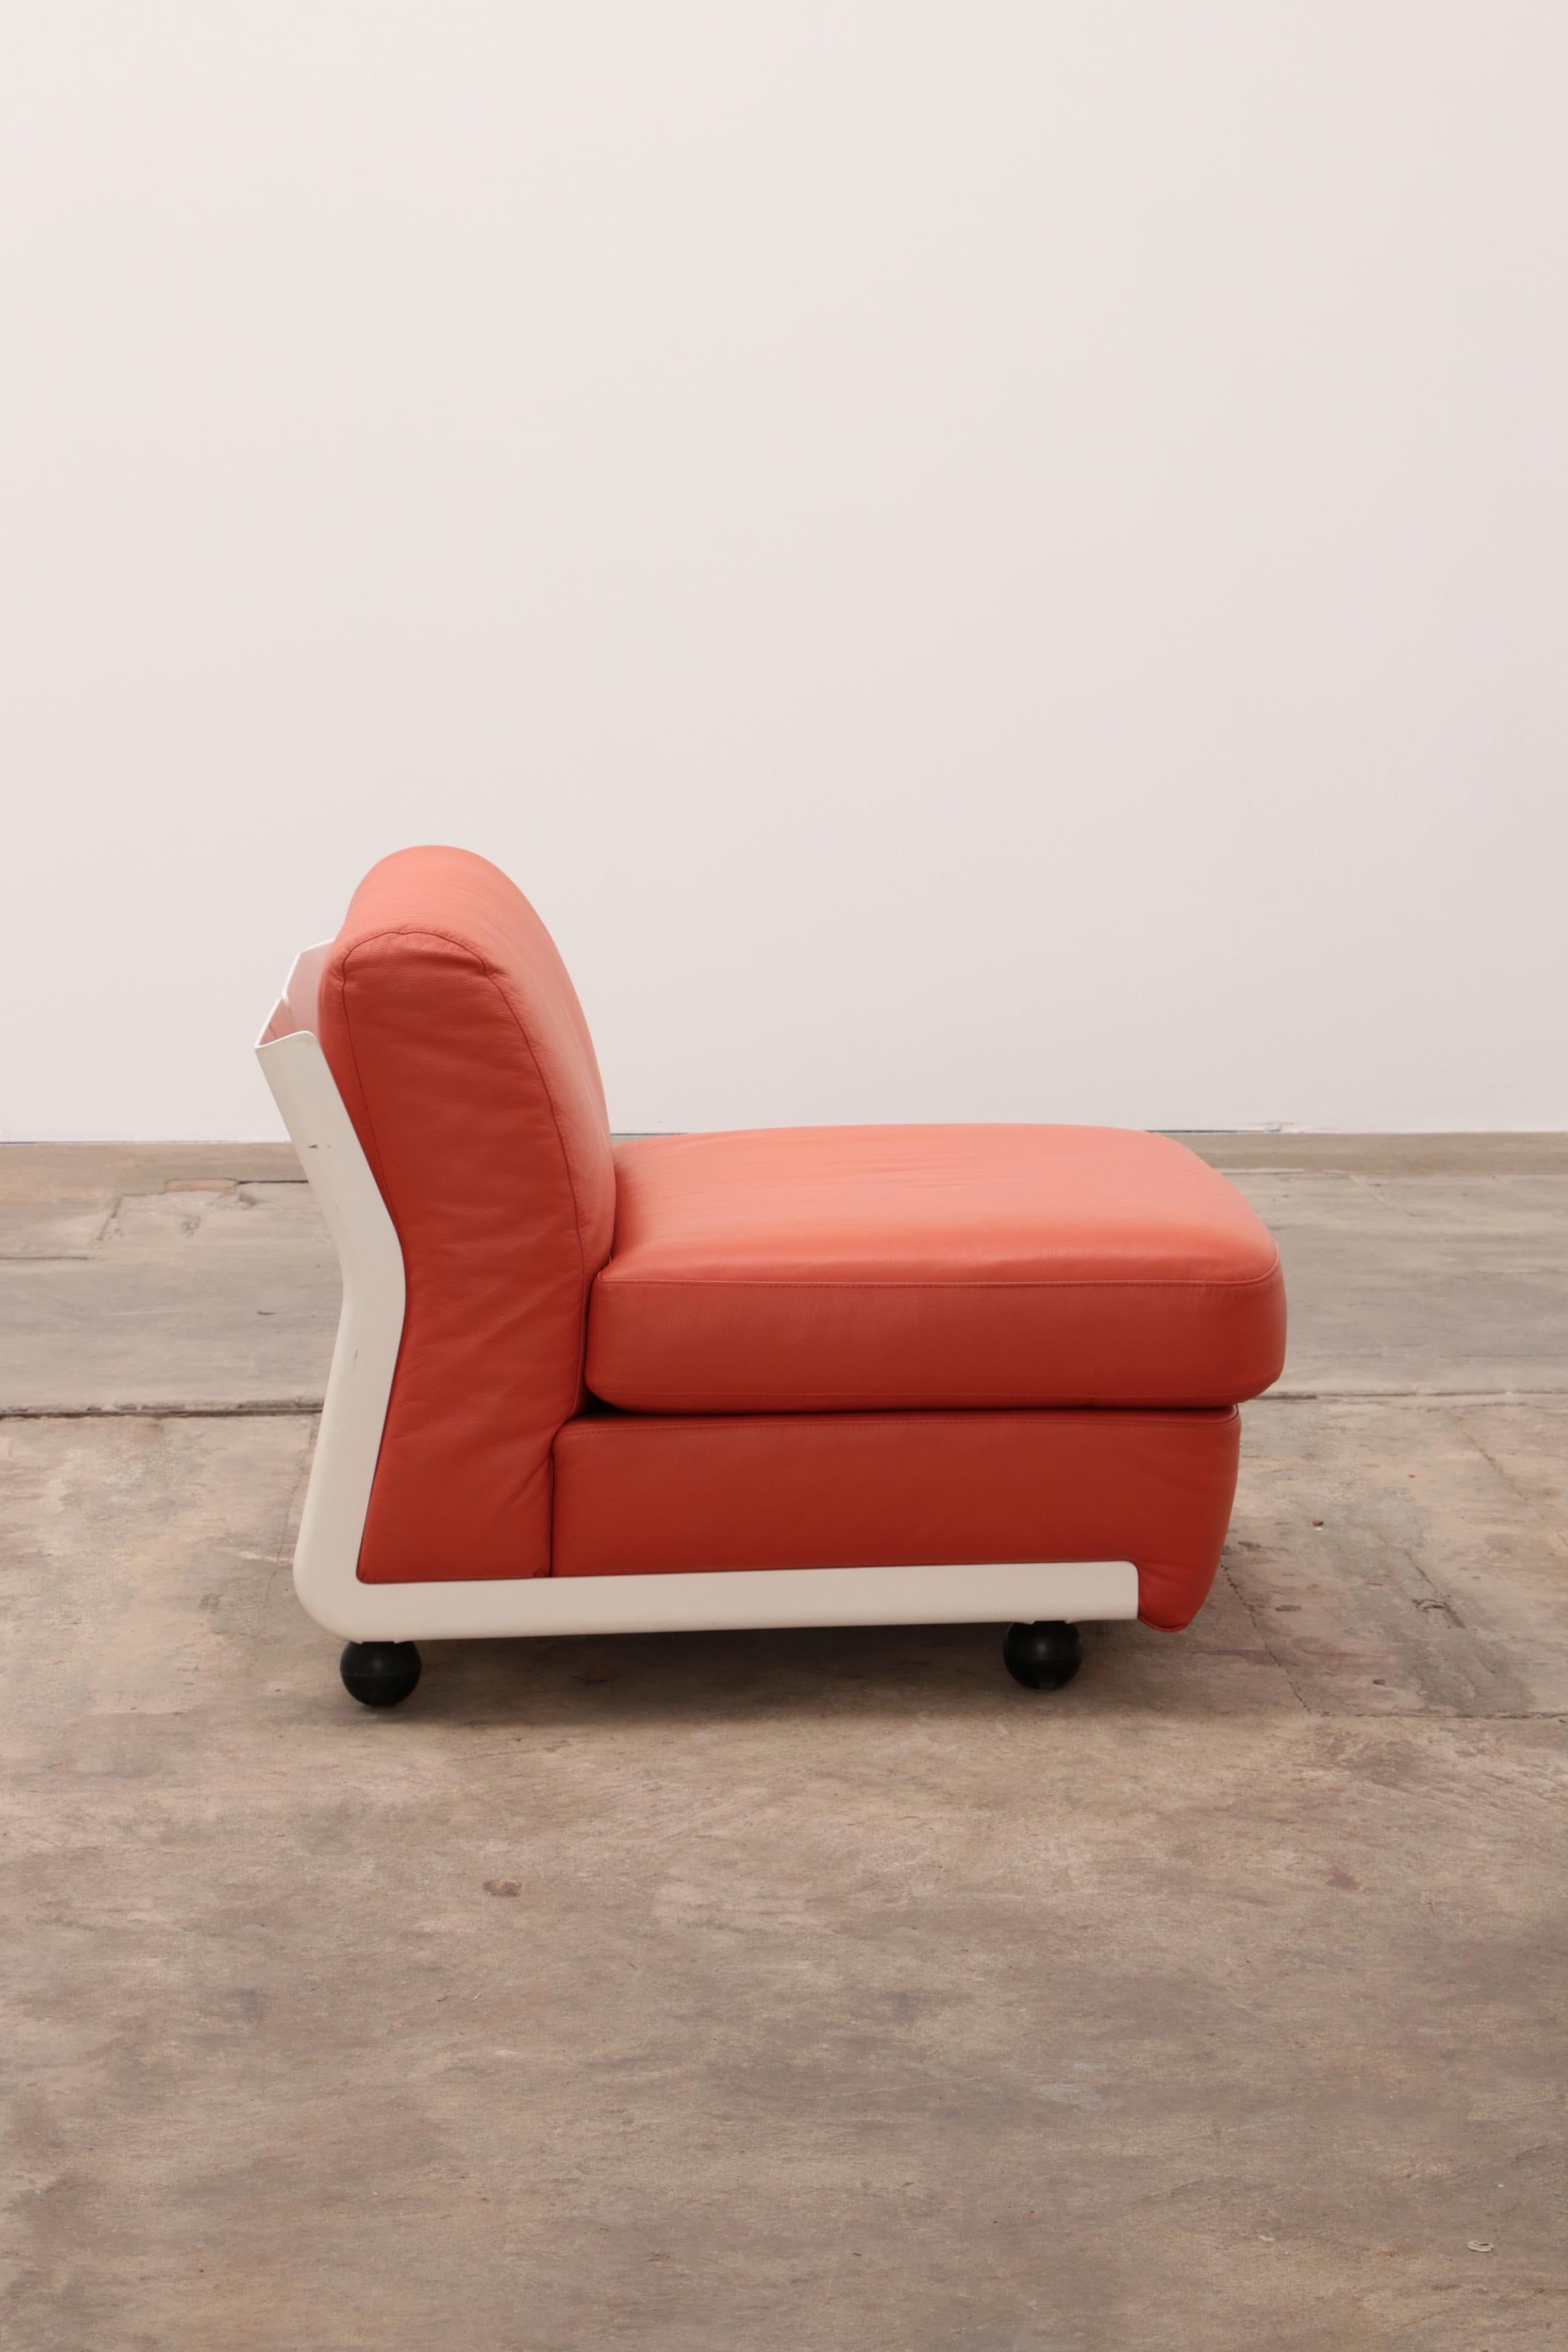 Mario Bellini Amanta Modular Sofa in Orange Leather for C&B Italy, 1960s For Sale 7